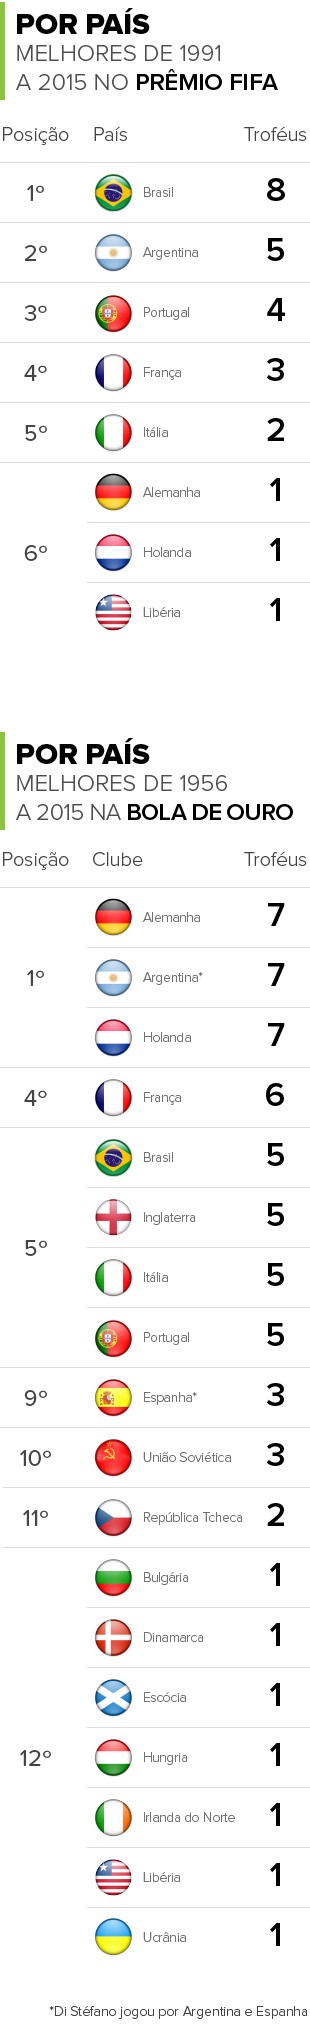 Info PREMIO FIFA e PREMIO BOLA DE OURO por países 1 (Foto: infoesporte)